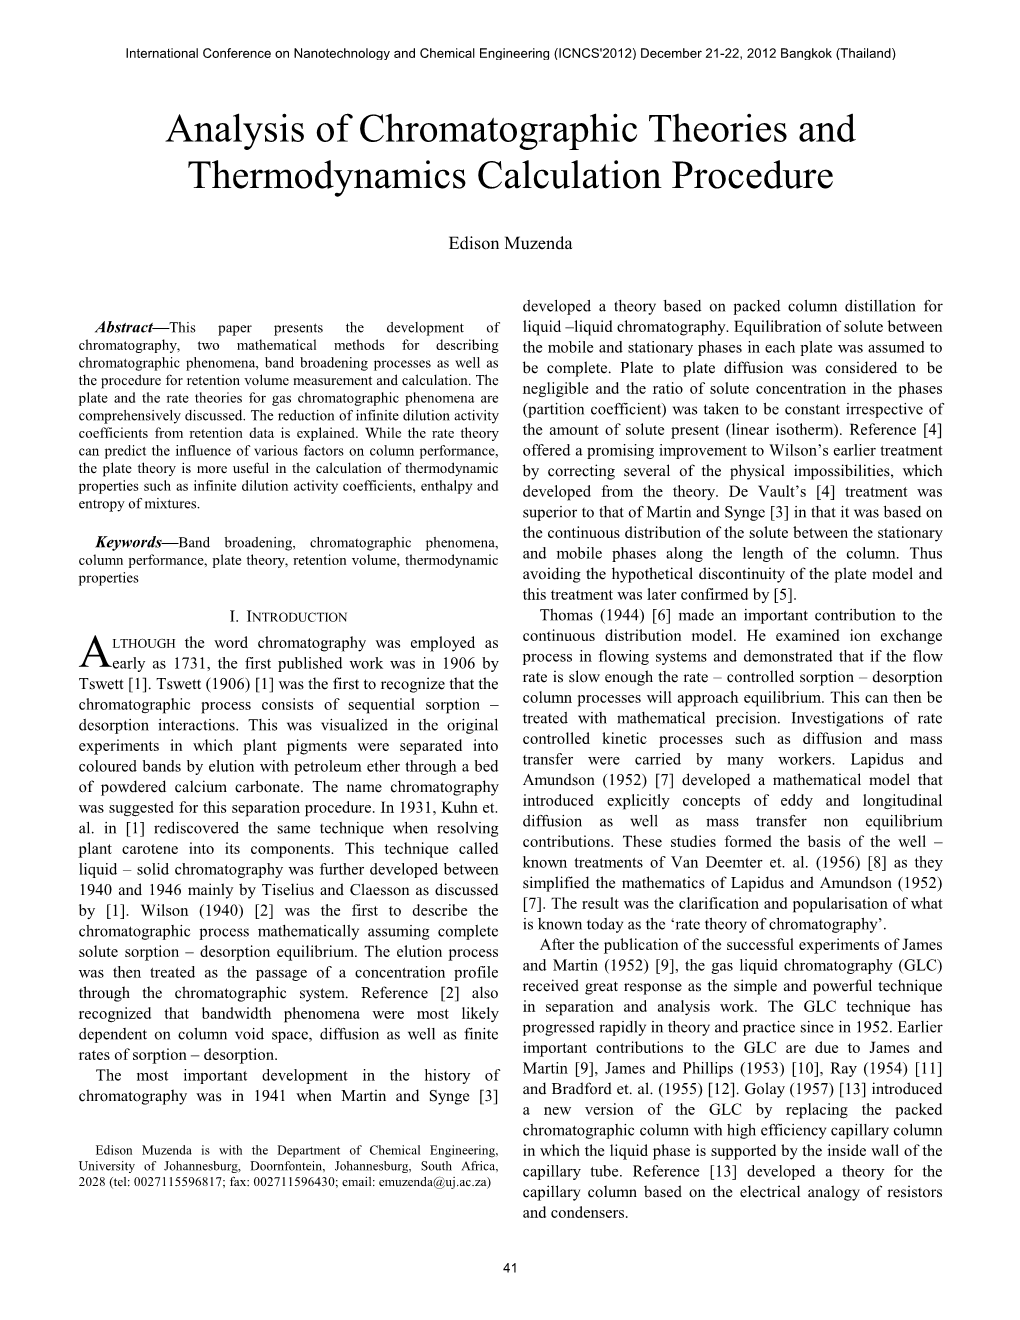 Analysis of Chromatographic Theories and Thermodynamics Calculation Procedure